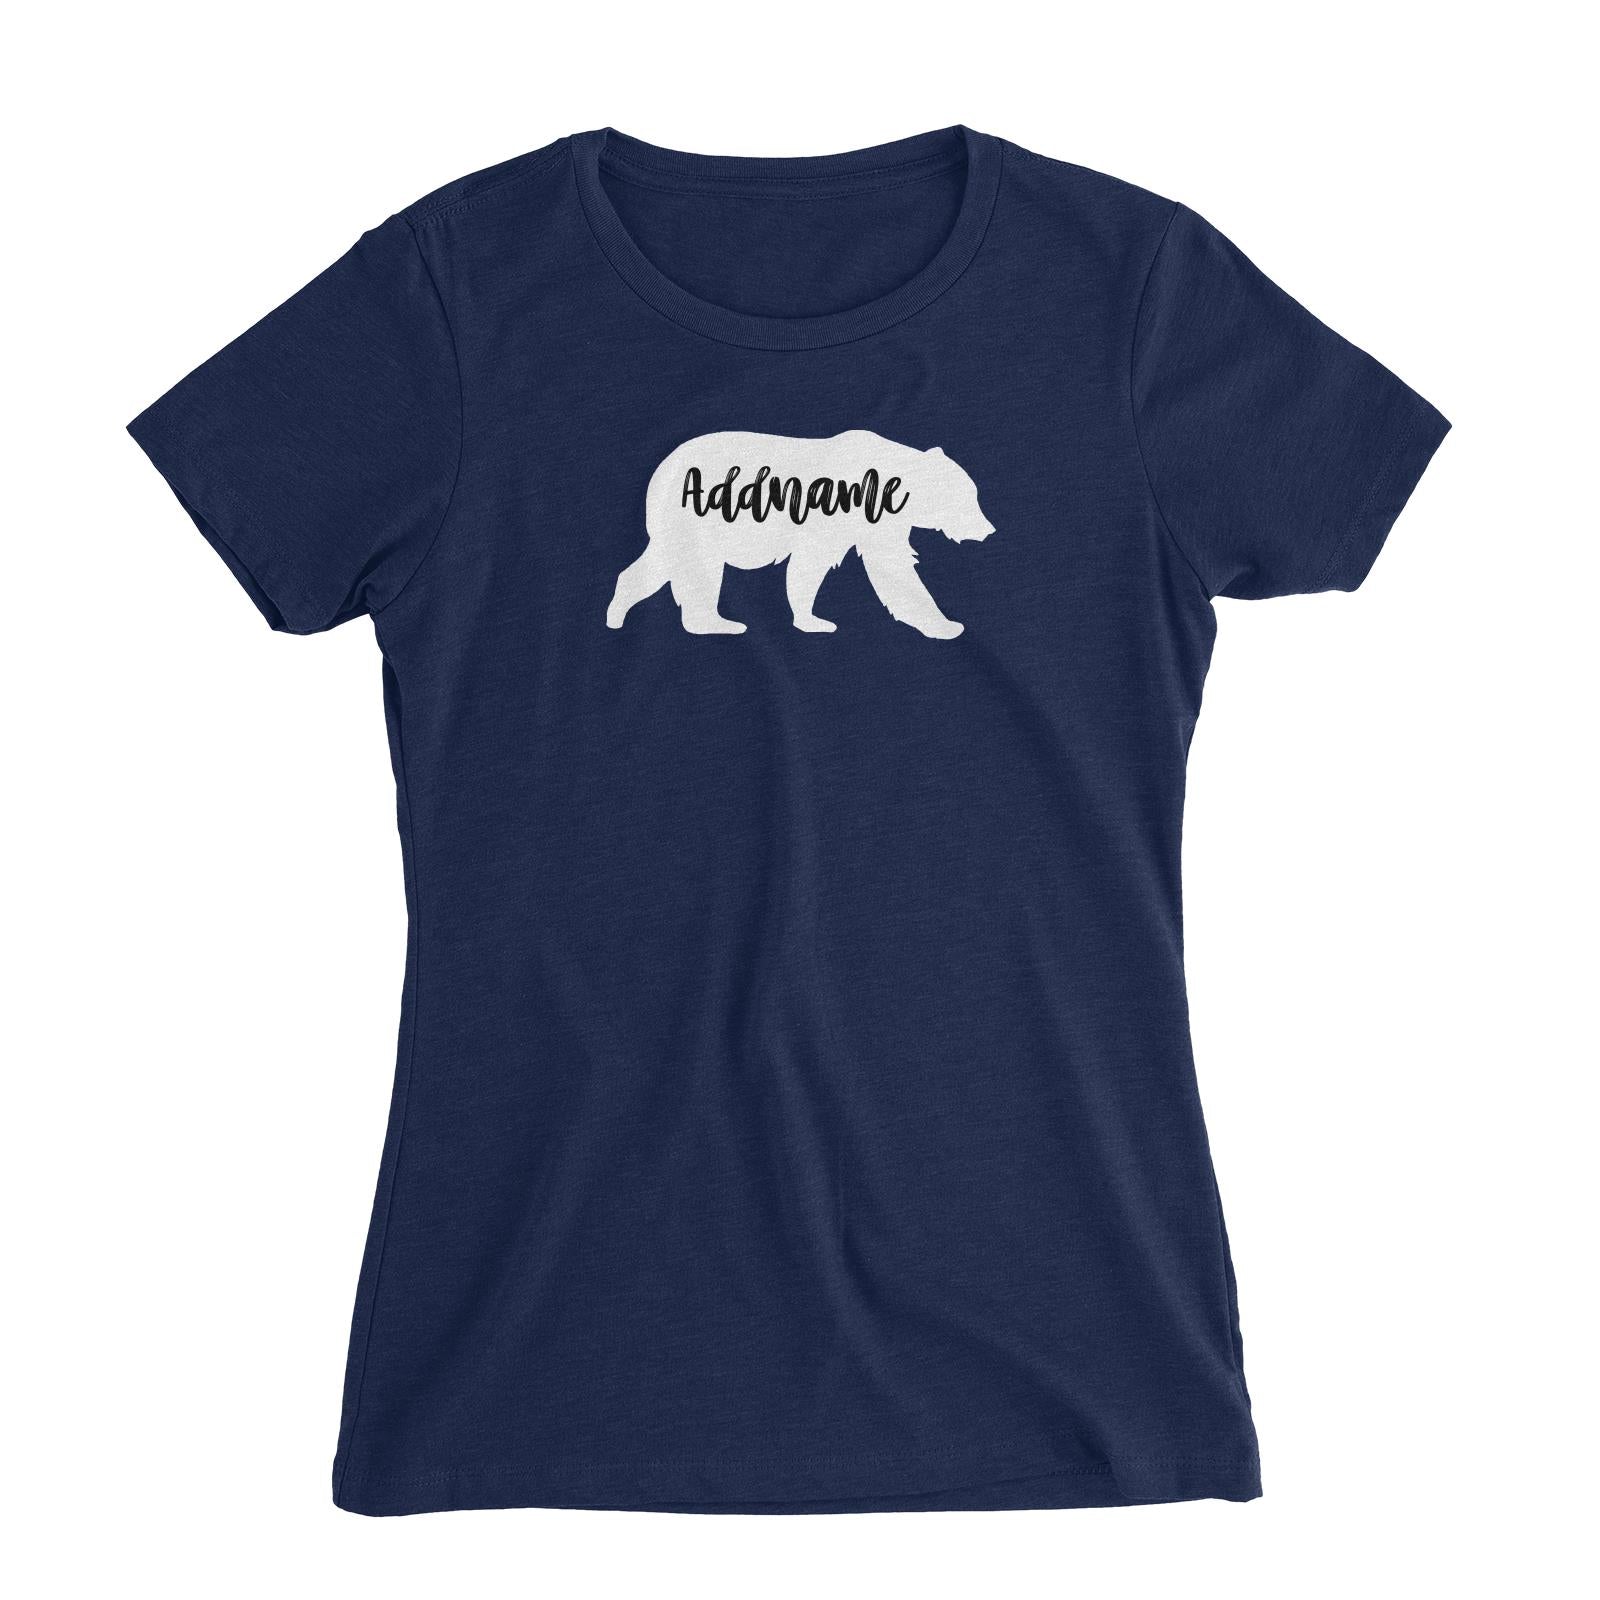 Cute Bear Silhouette Addname Women's Slim Fit T-Shirt